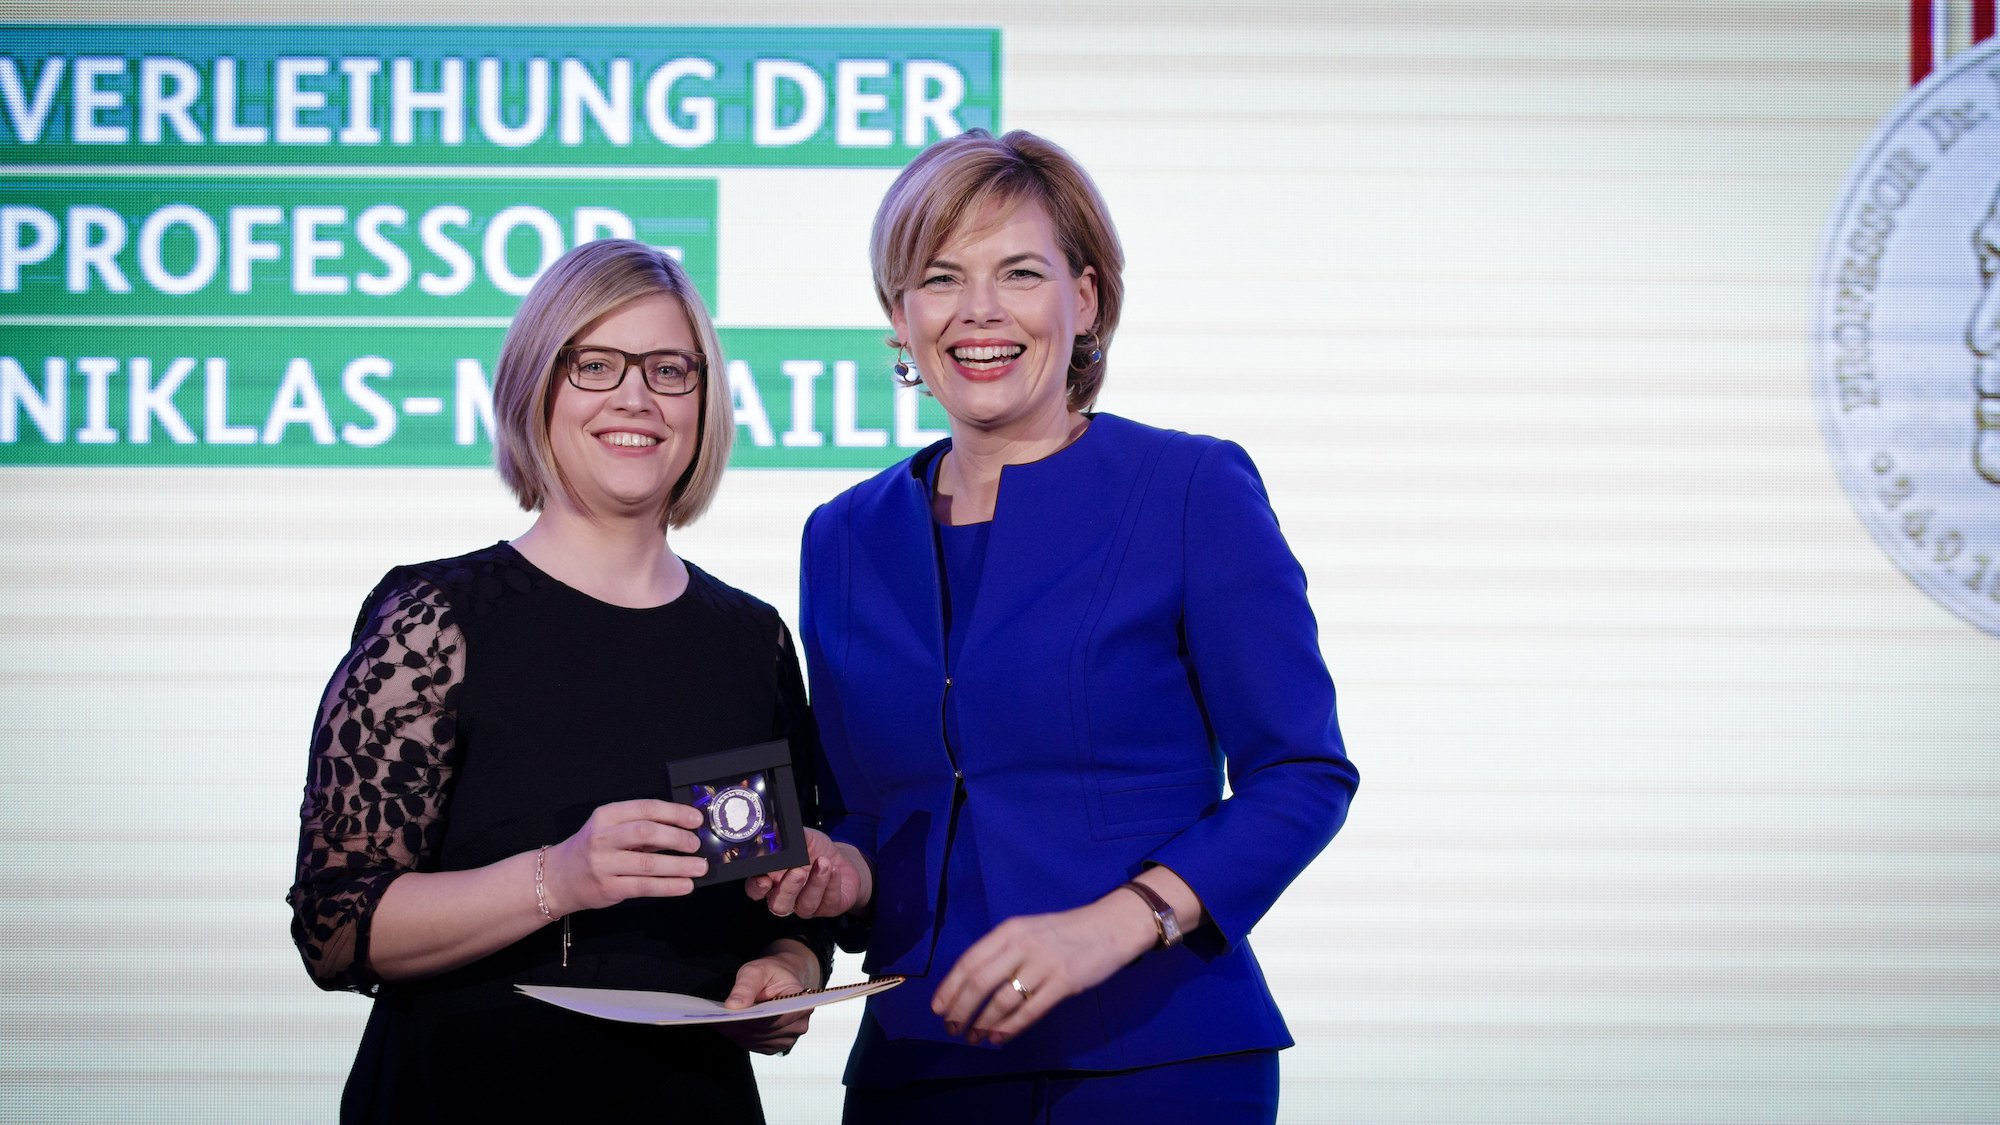 Jutta Zeisset wird Professor-Niklas-Medaille verliehen